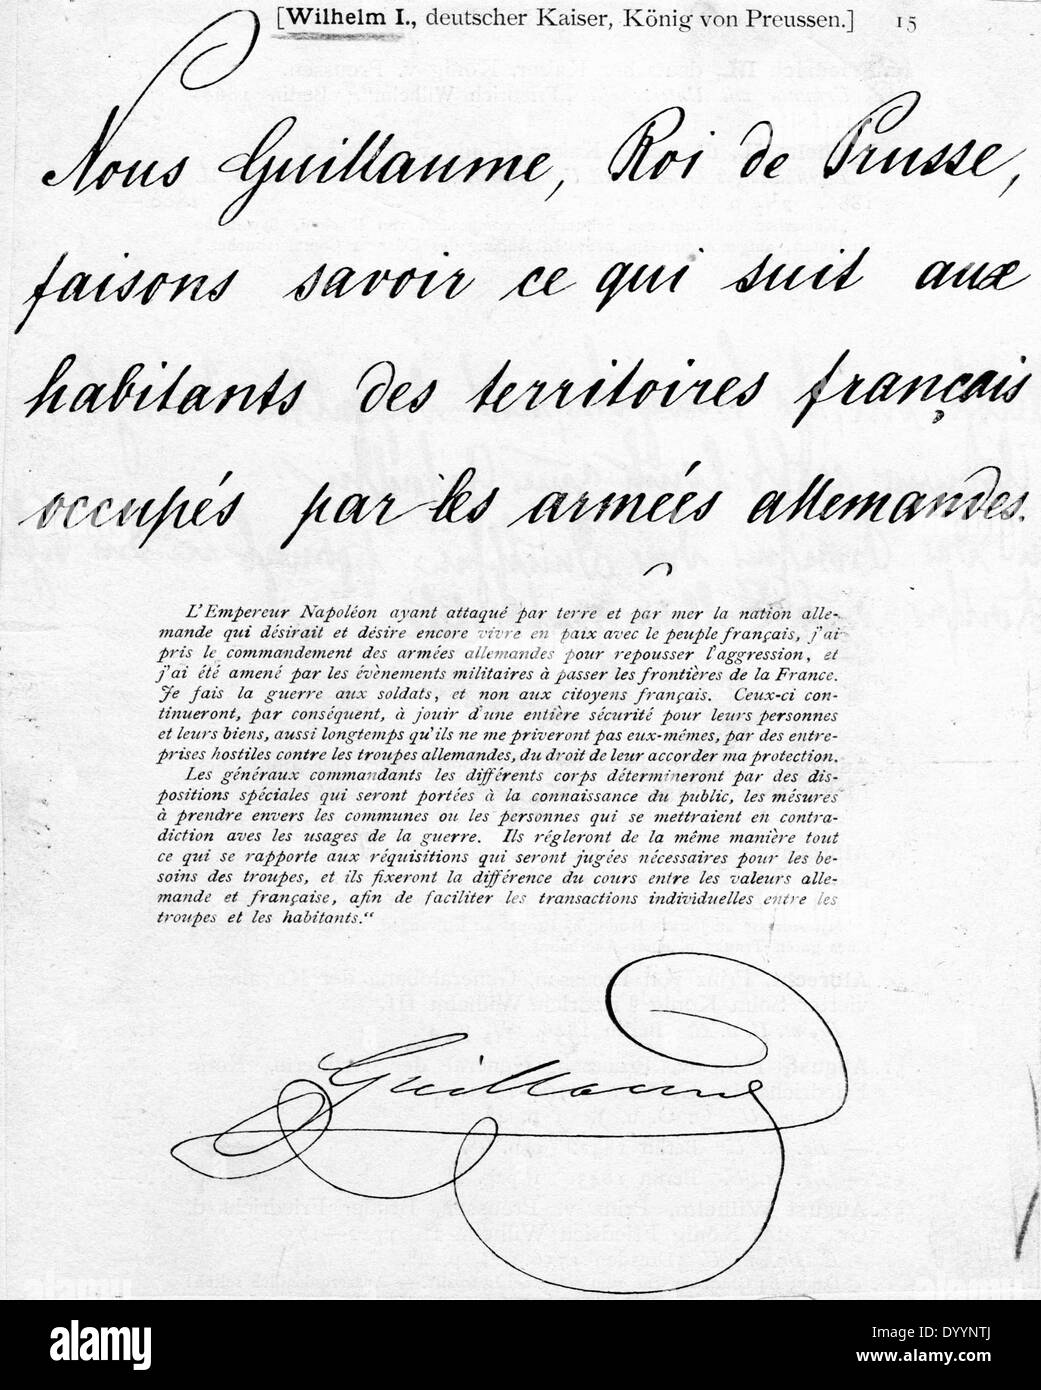 The proclamation of William I, 10.08.1870 Stock Photo